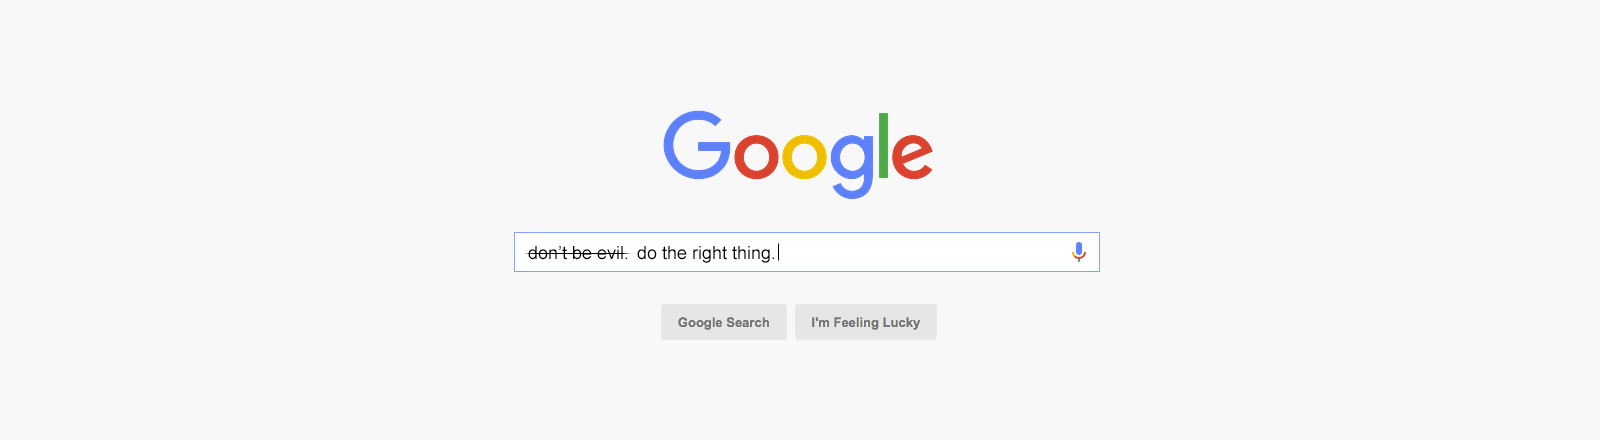 Ok google найти игры. Гуглить. "Do the right thing" Google.